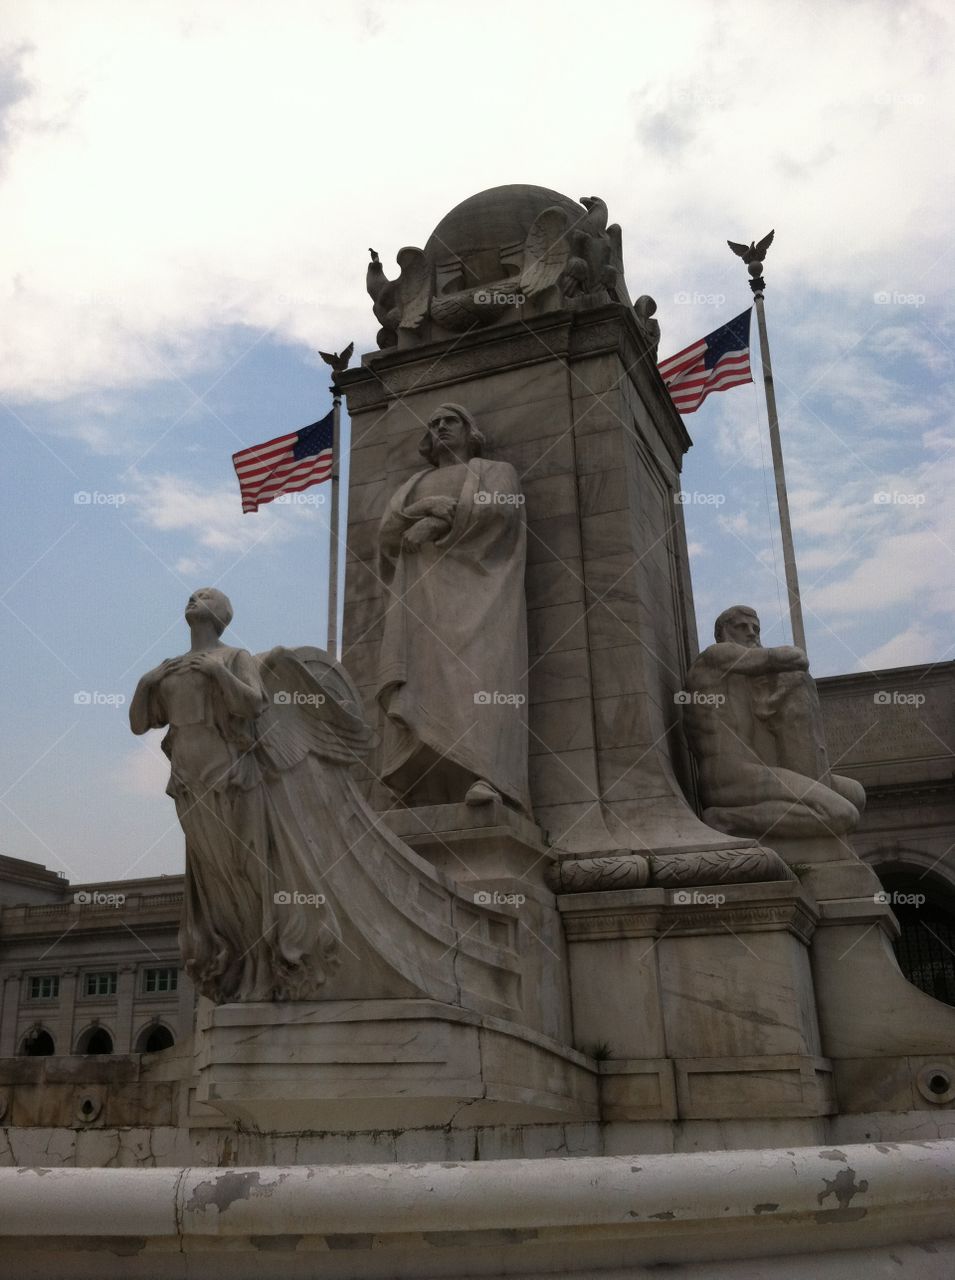 Capitol Hill - Union Station Memorial Sculpture . Memorial Fountain Christopher Columbus statue 